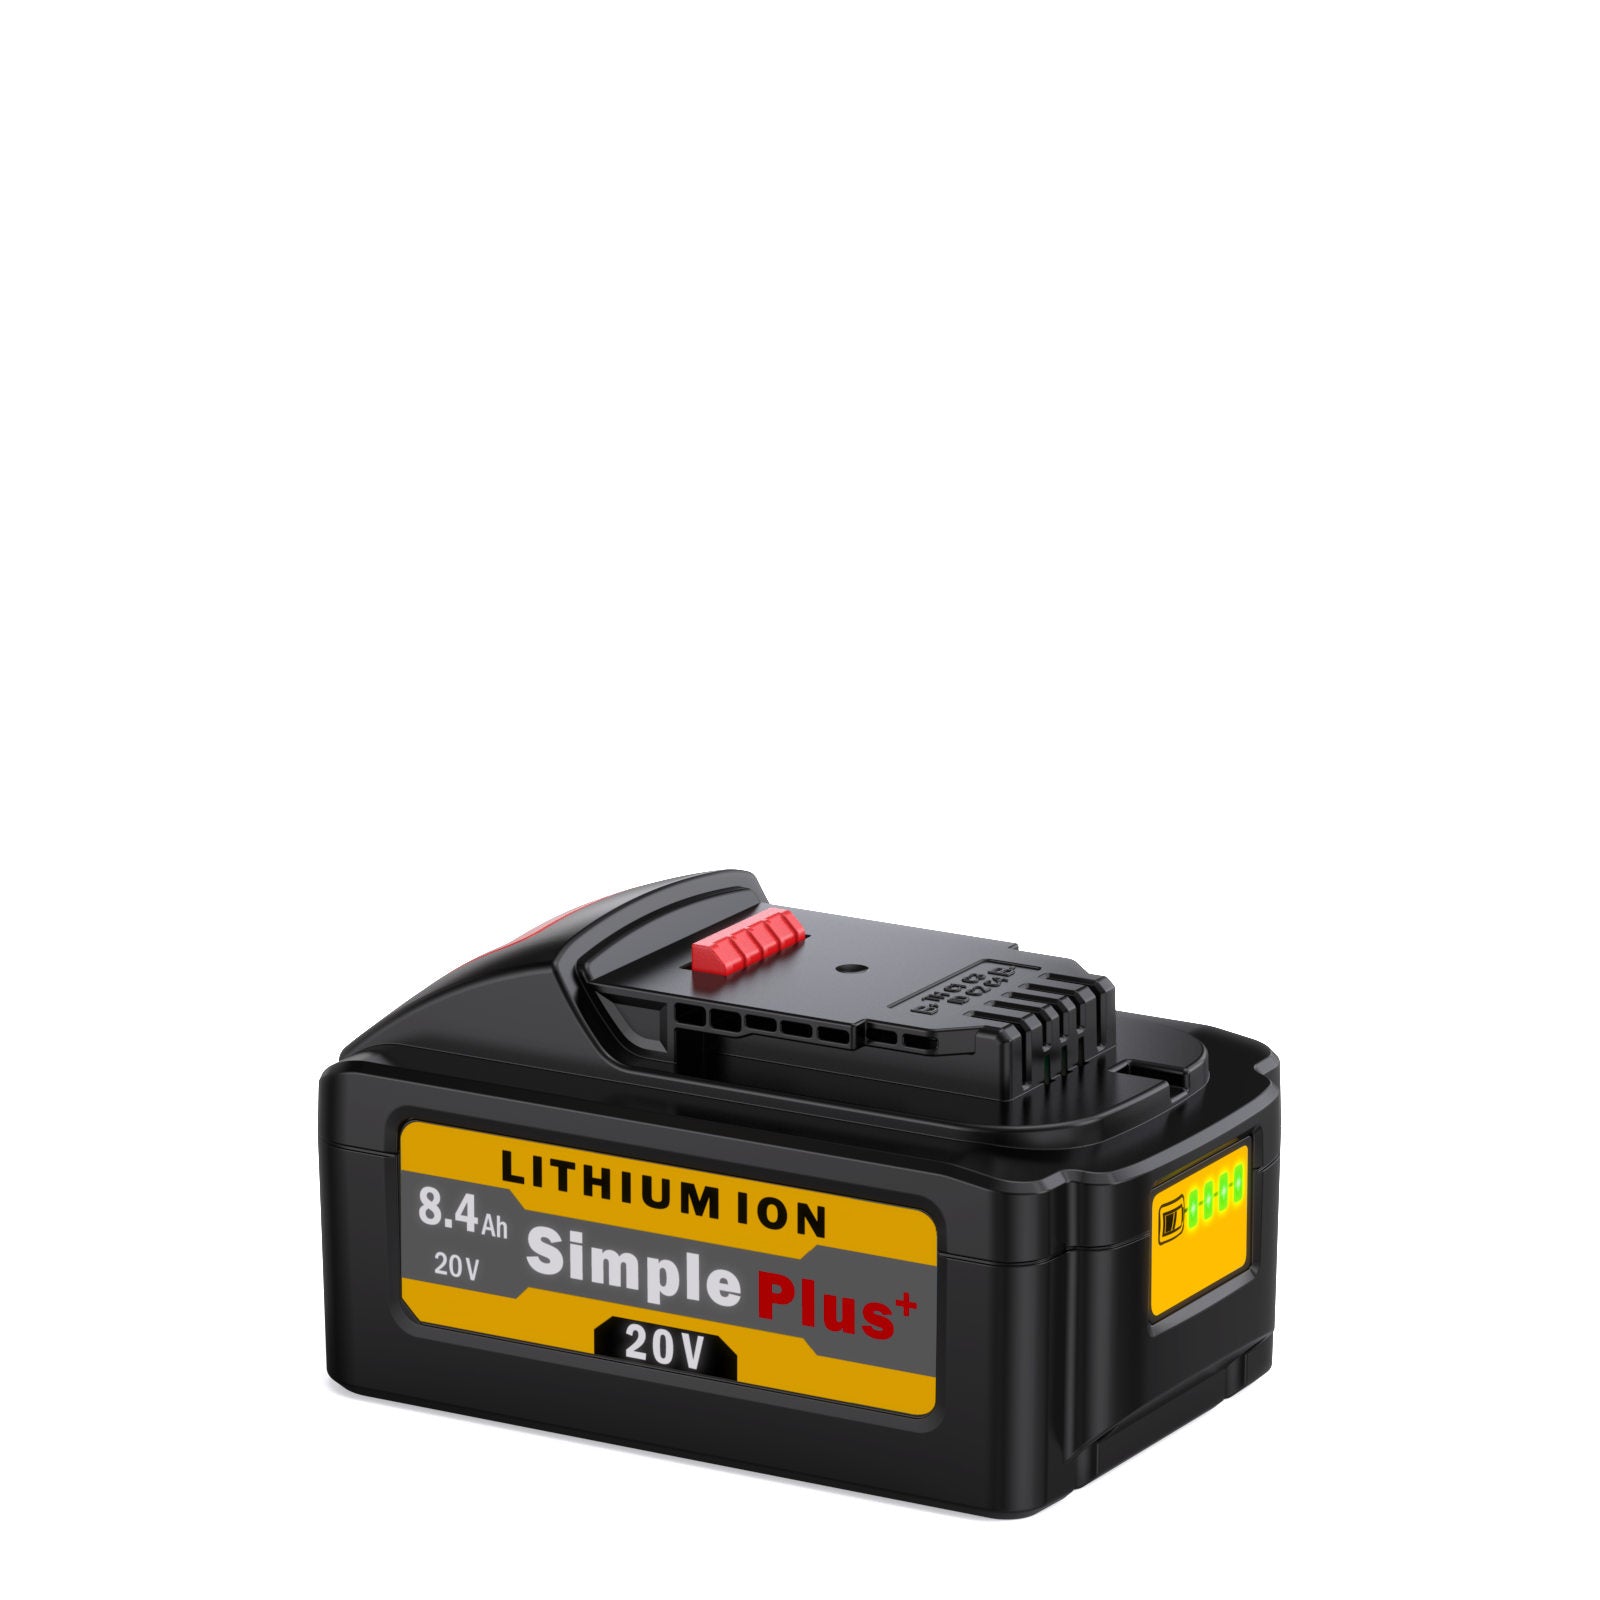 SimplePlus DCB208 For Dewalt 20V Max Li-ion Battery 8.4Ah